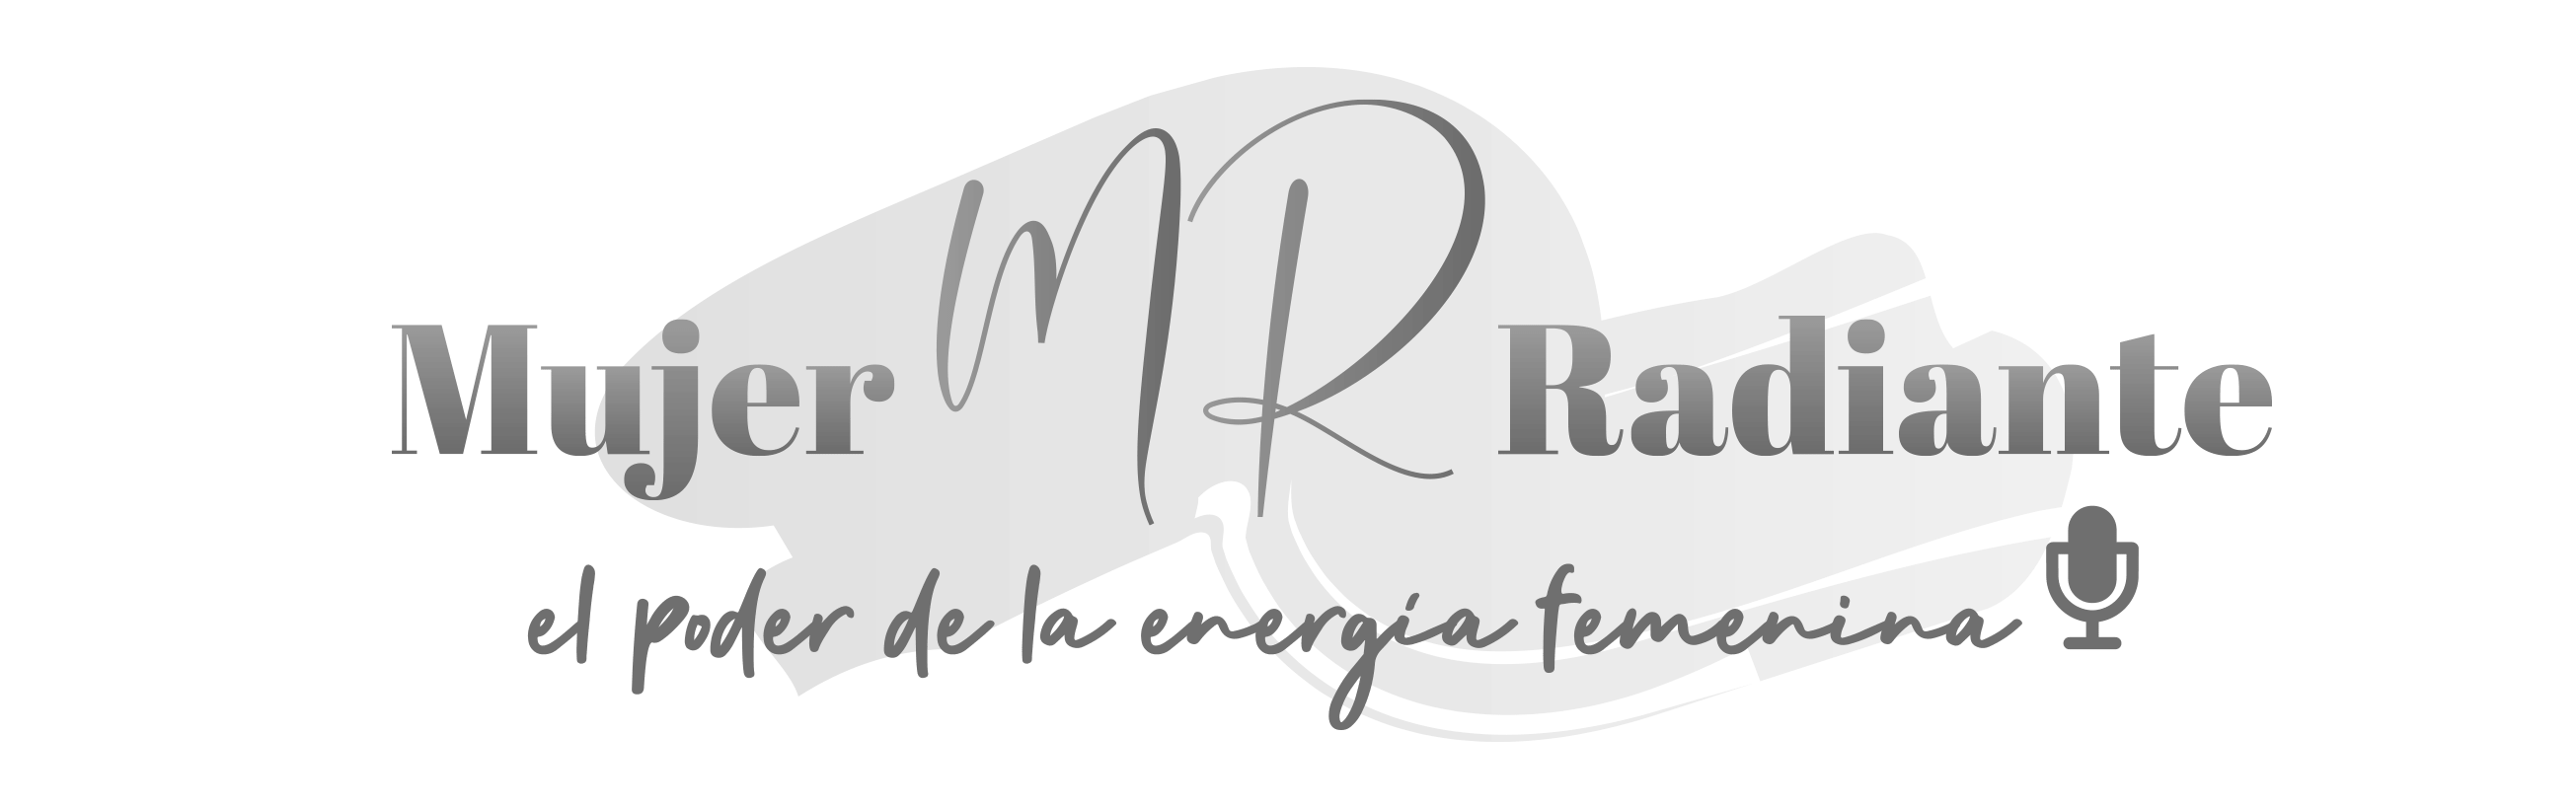 logo_radiante_bn